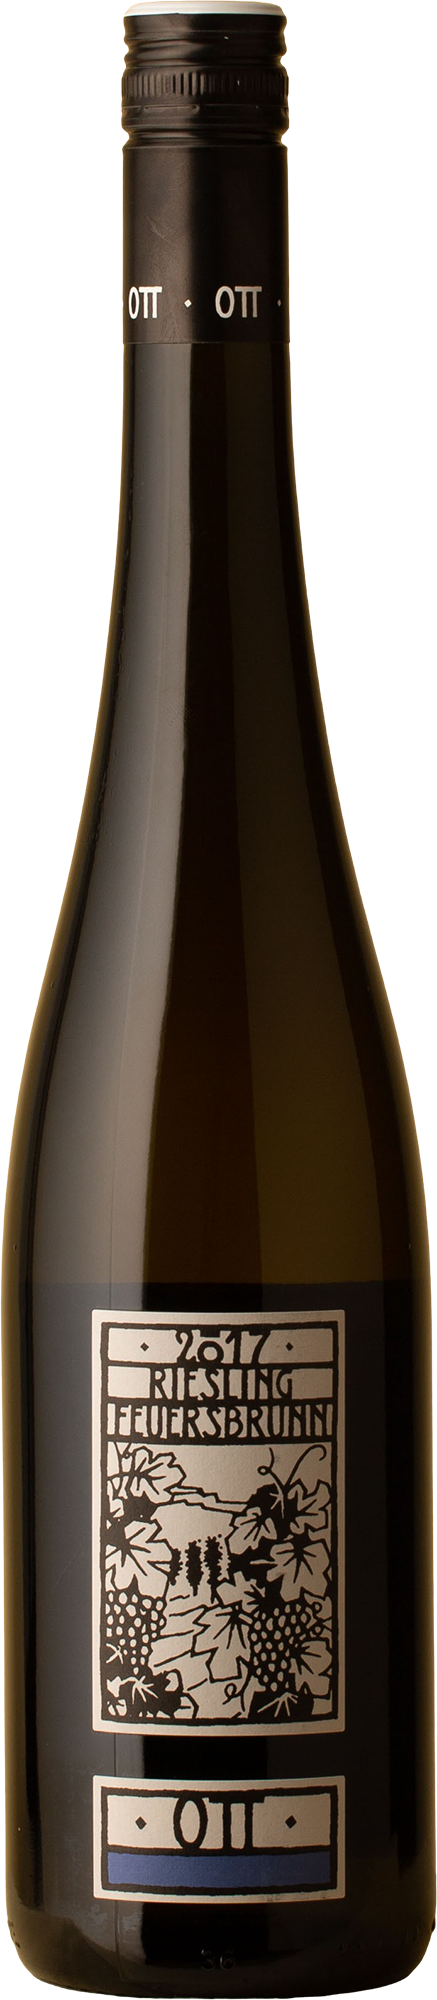 Bernhard Ott - Feuersbrunn Riesling 2017 White Wine